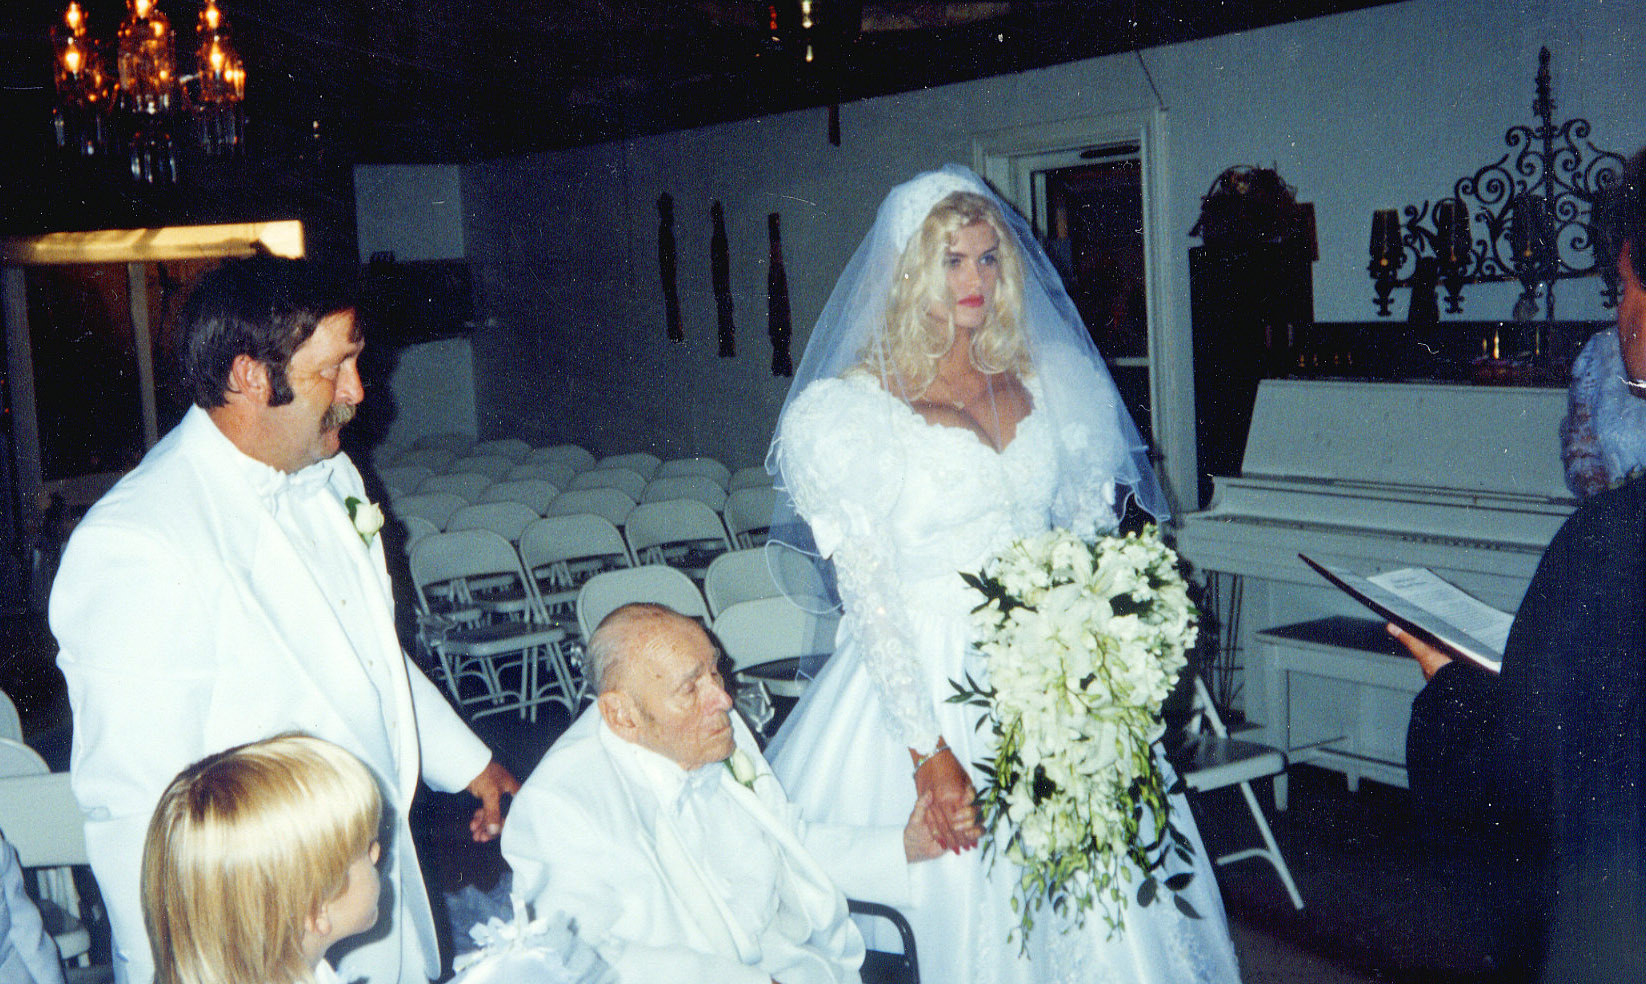 Anna Nicole Smith marries oil tycoon J. Howard Marshall II in Texas, on June 27, 1994